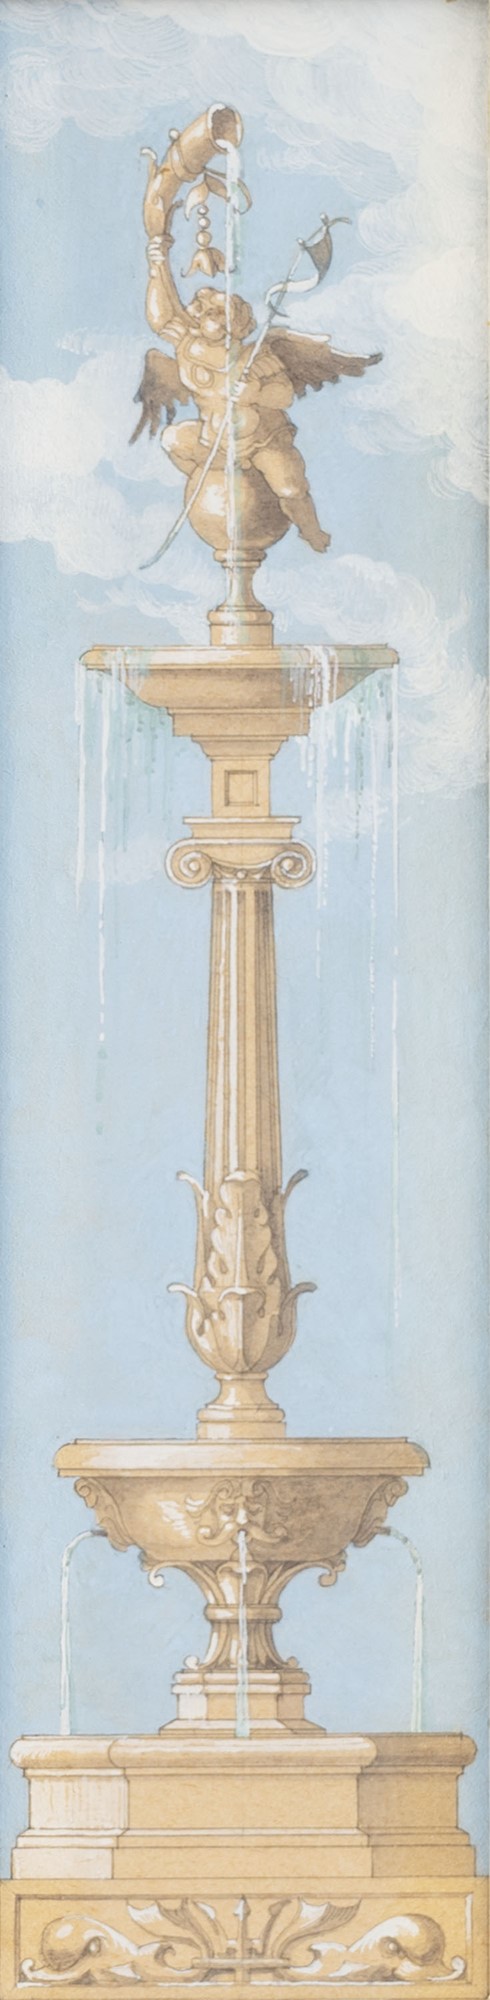 Jules-Frédéric Bouchet (Parigi 1799-1860) - Study for a fountain